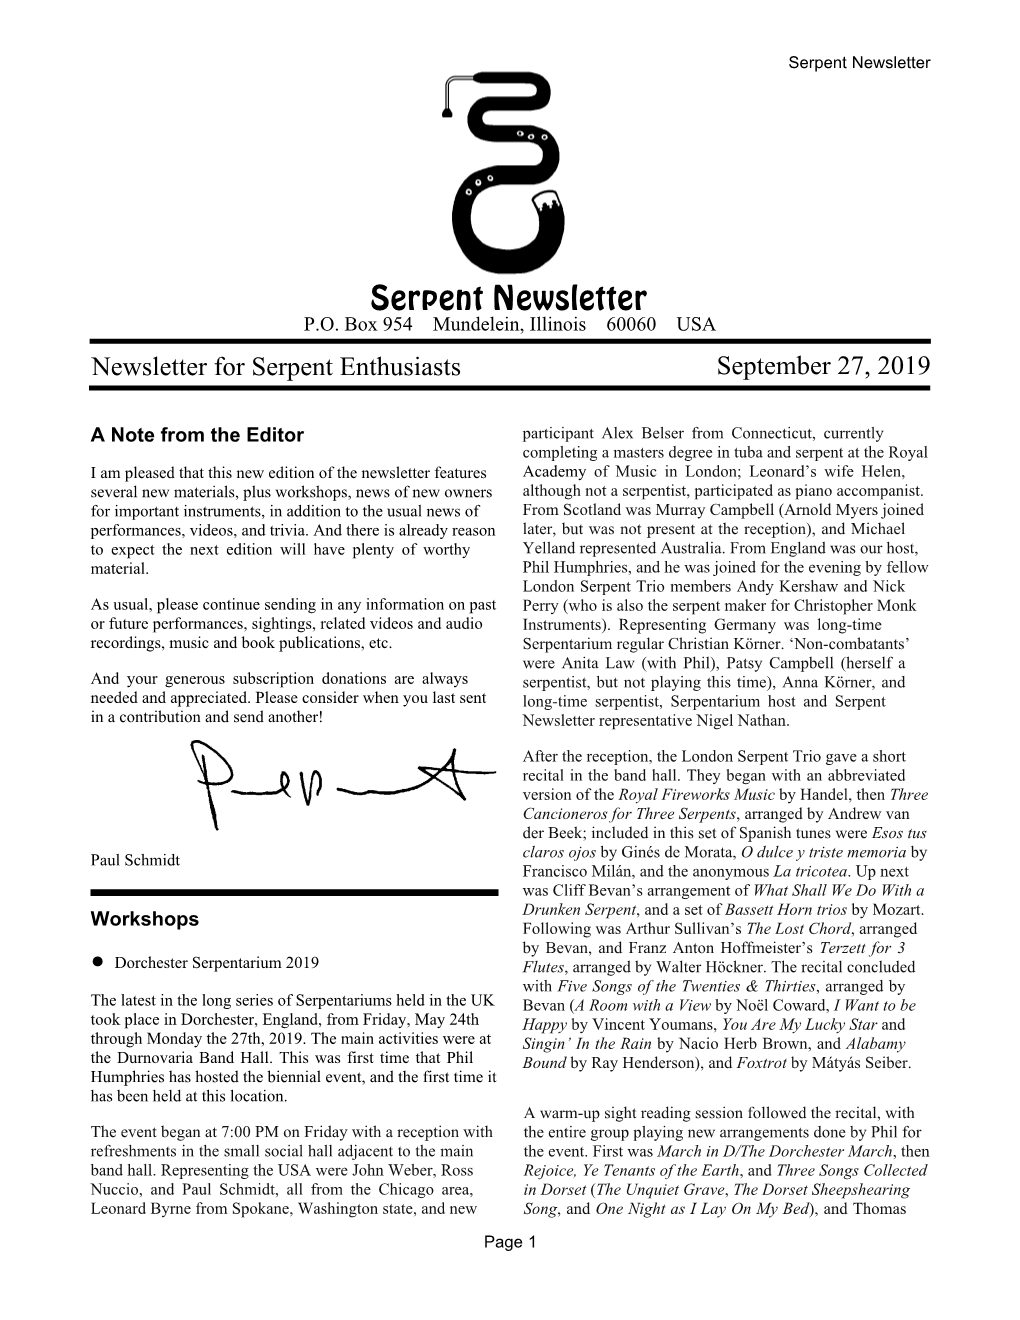 Newsletter for Serpent Enthusiasts September 27, 2019